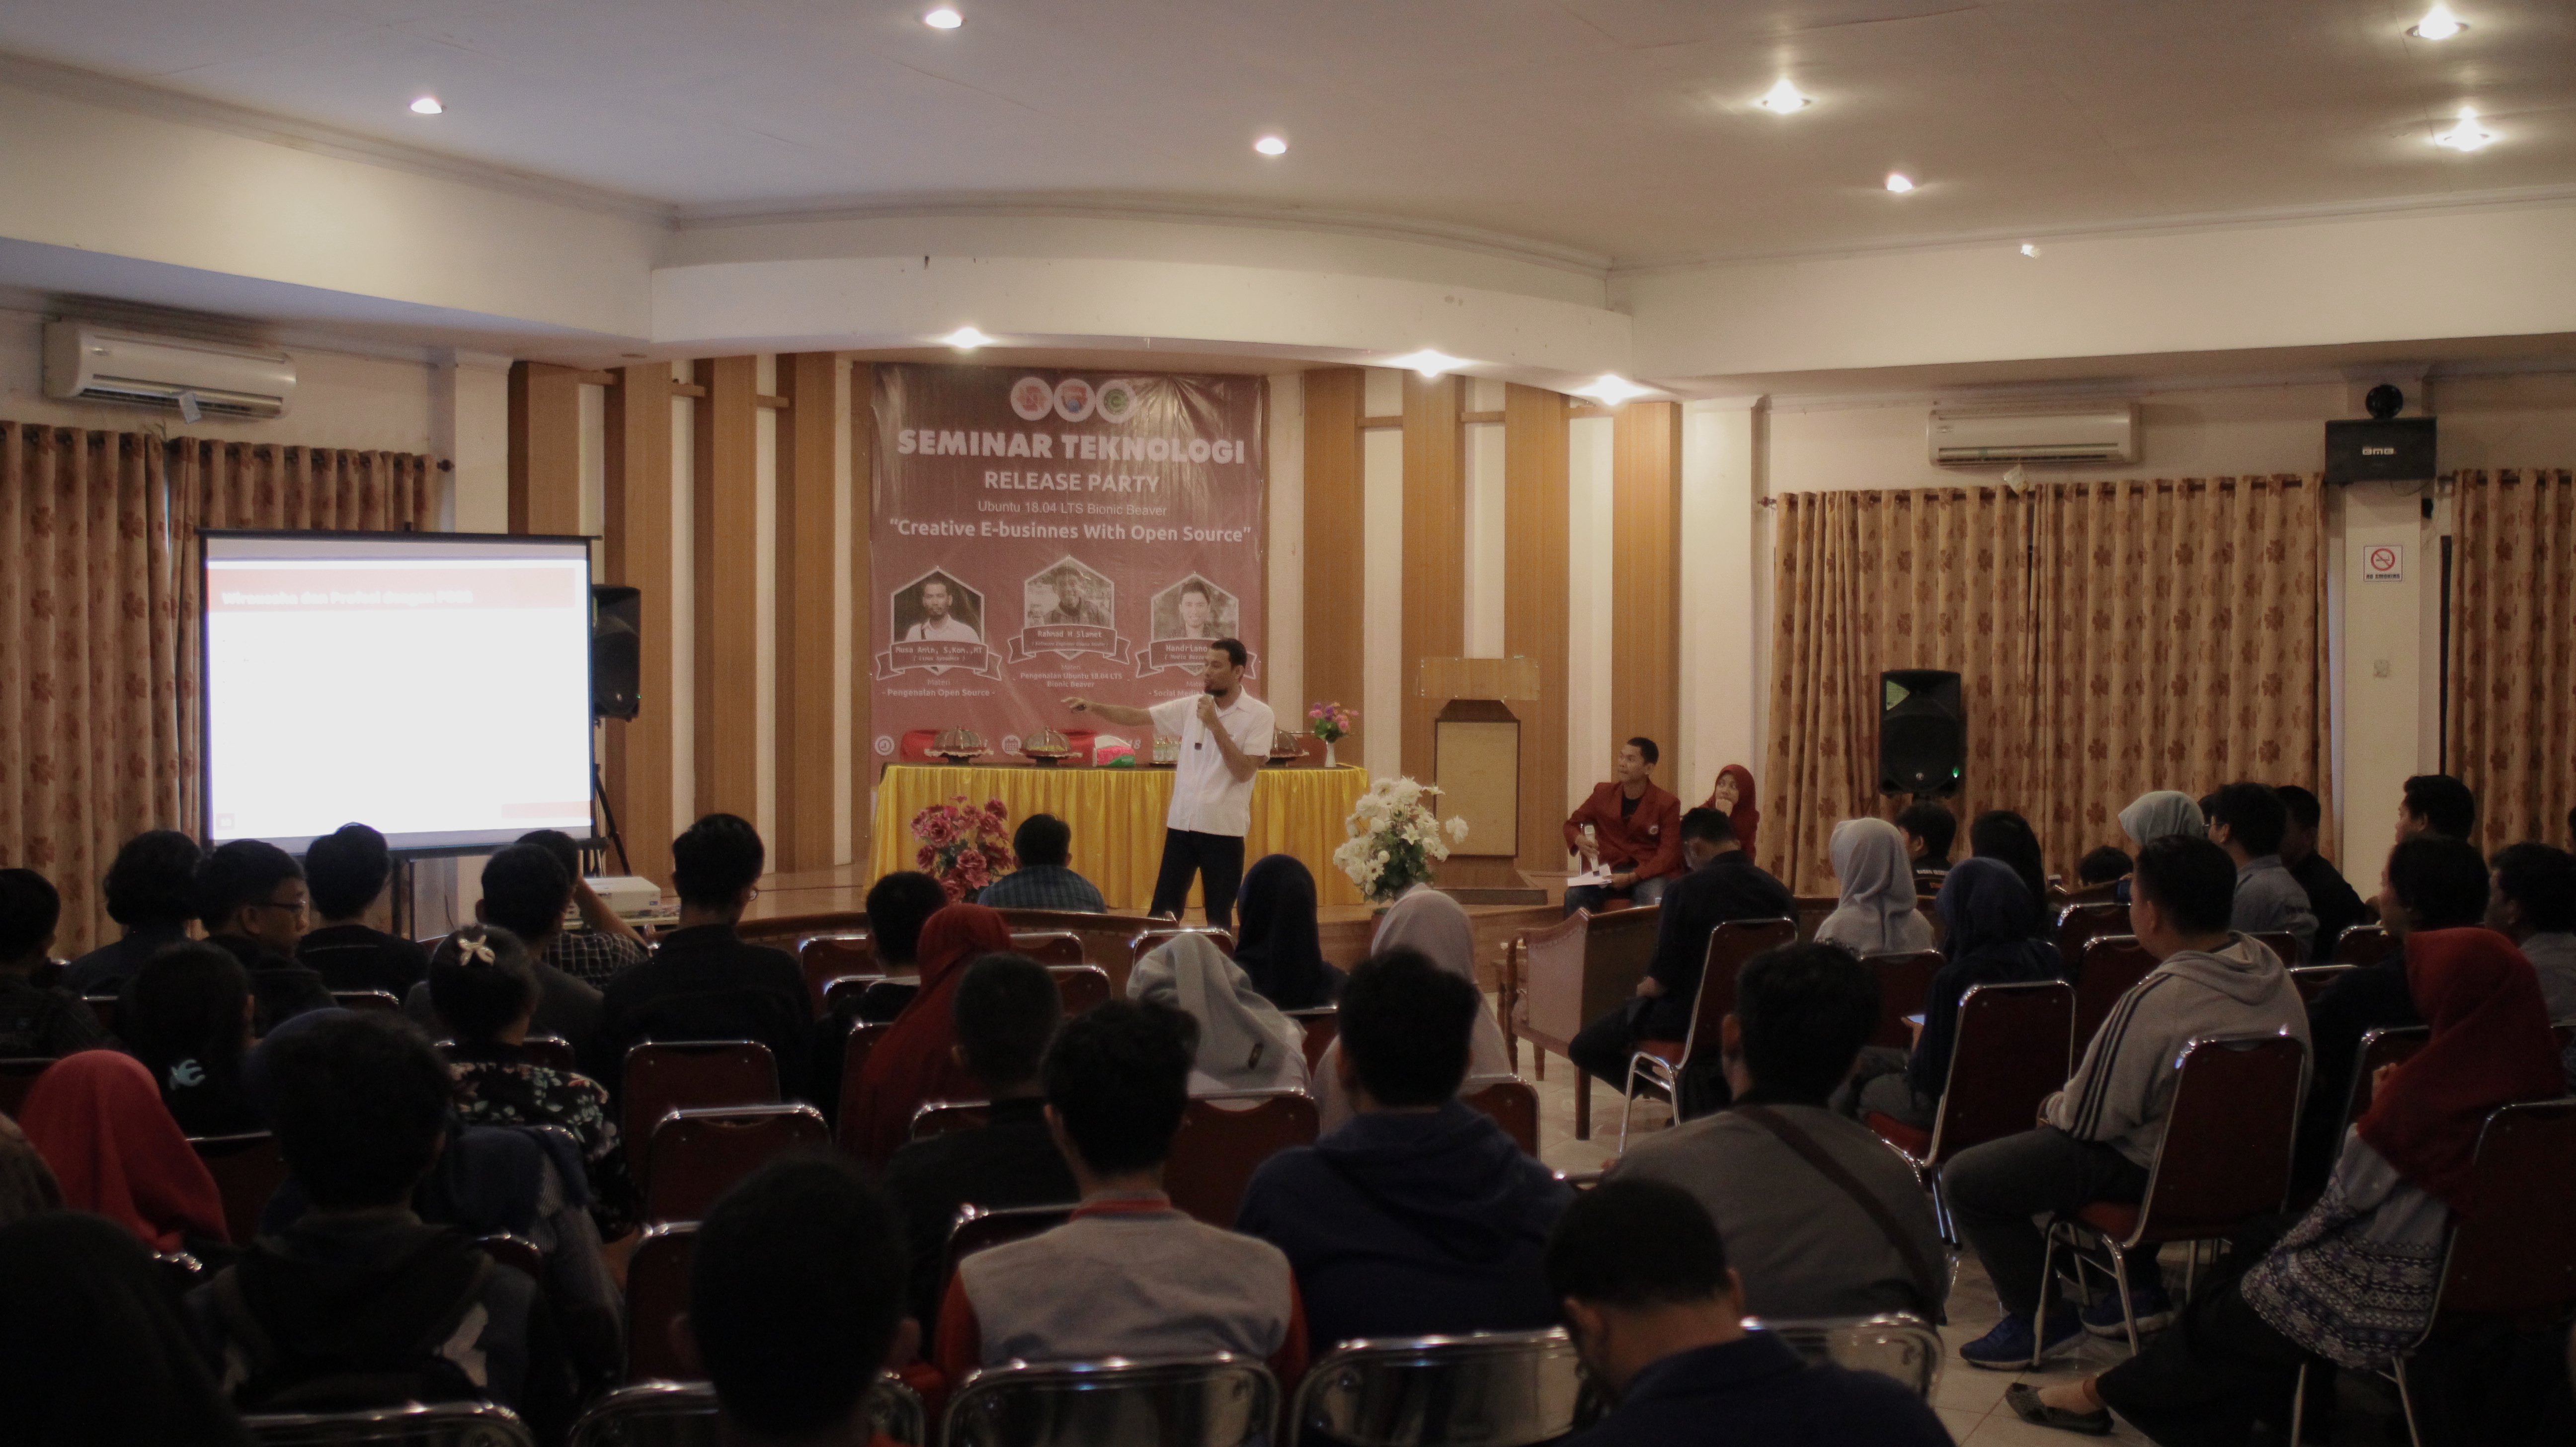 Seminar Teknologi STIMED Nusa Palapa : Creative E-Business With Open Source | Release Party Ubuntu 18.04 LTS Bionic Beaver